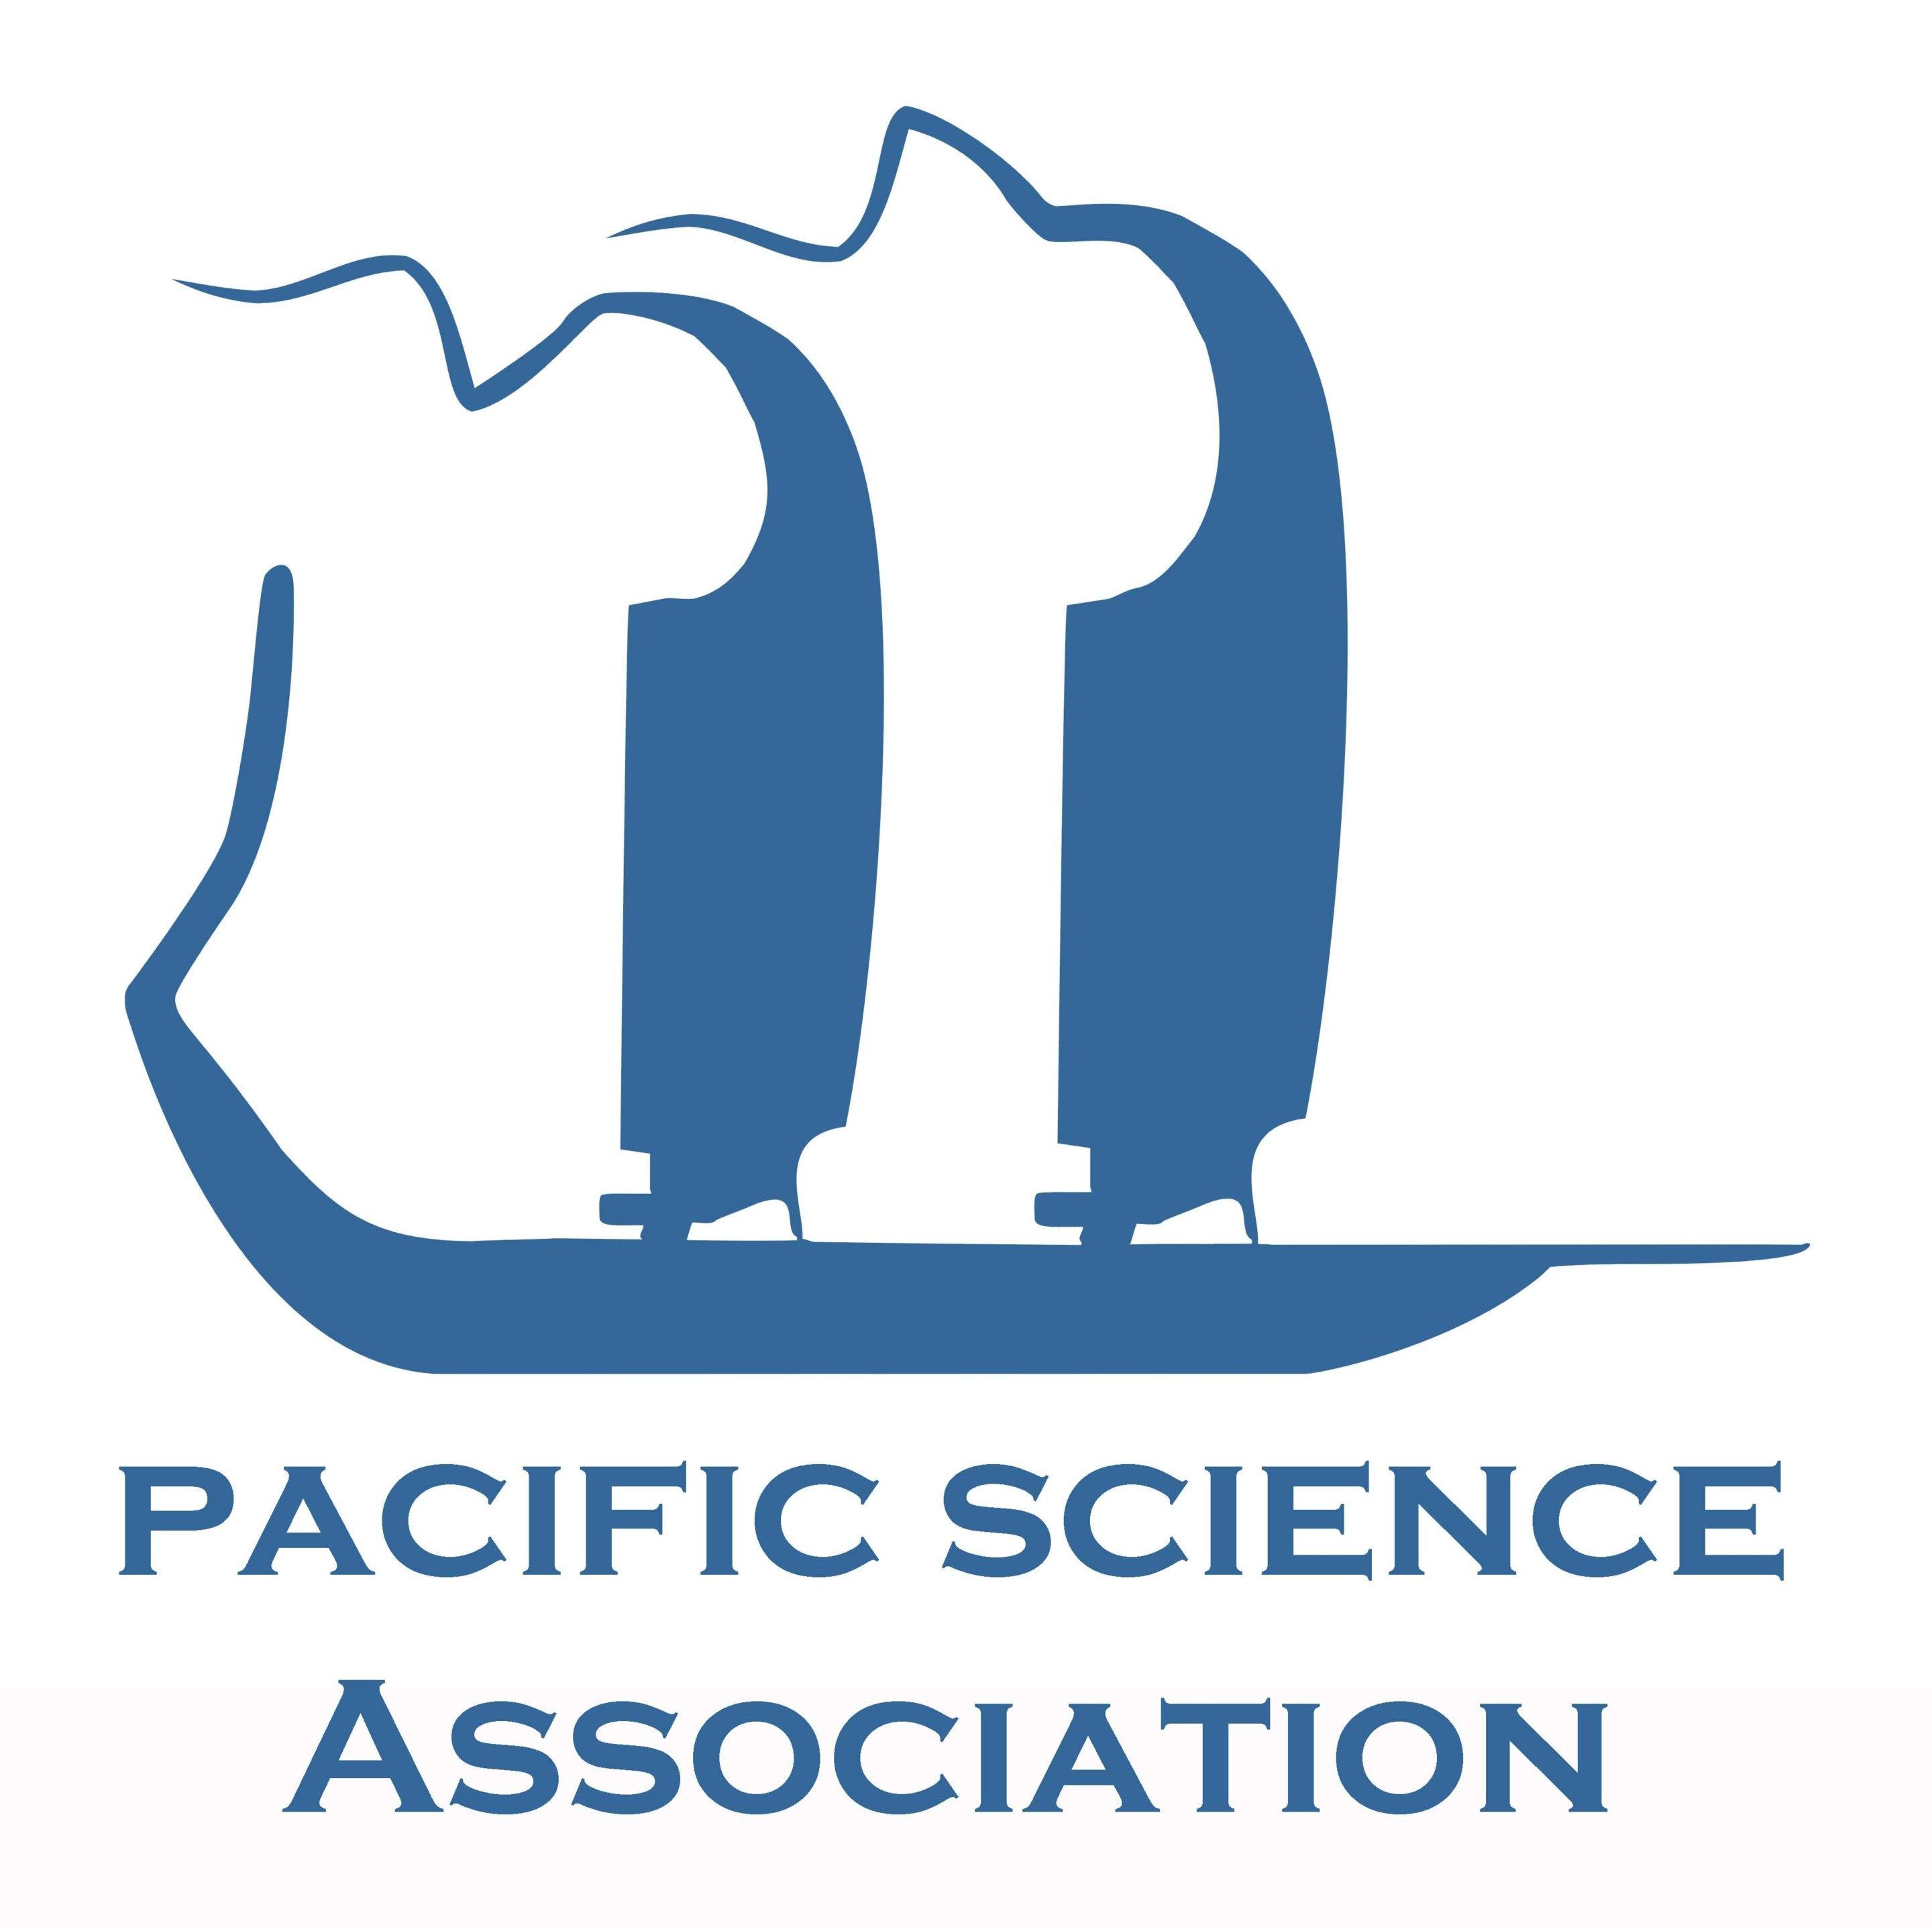 PSA Logo - ABOUT THE PSA LOGO